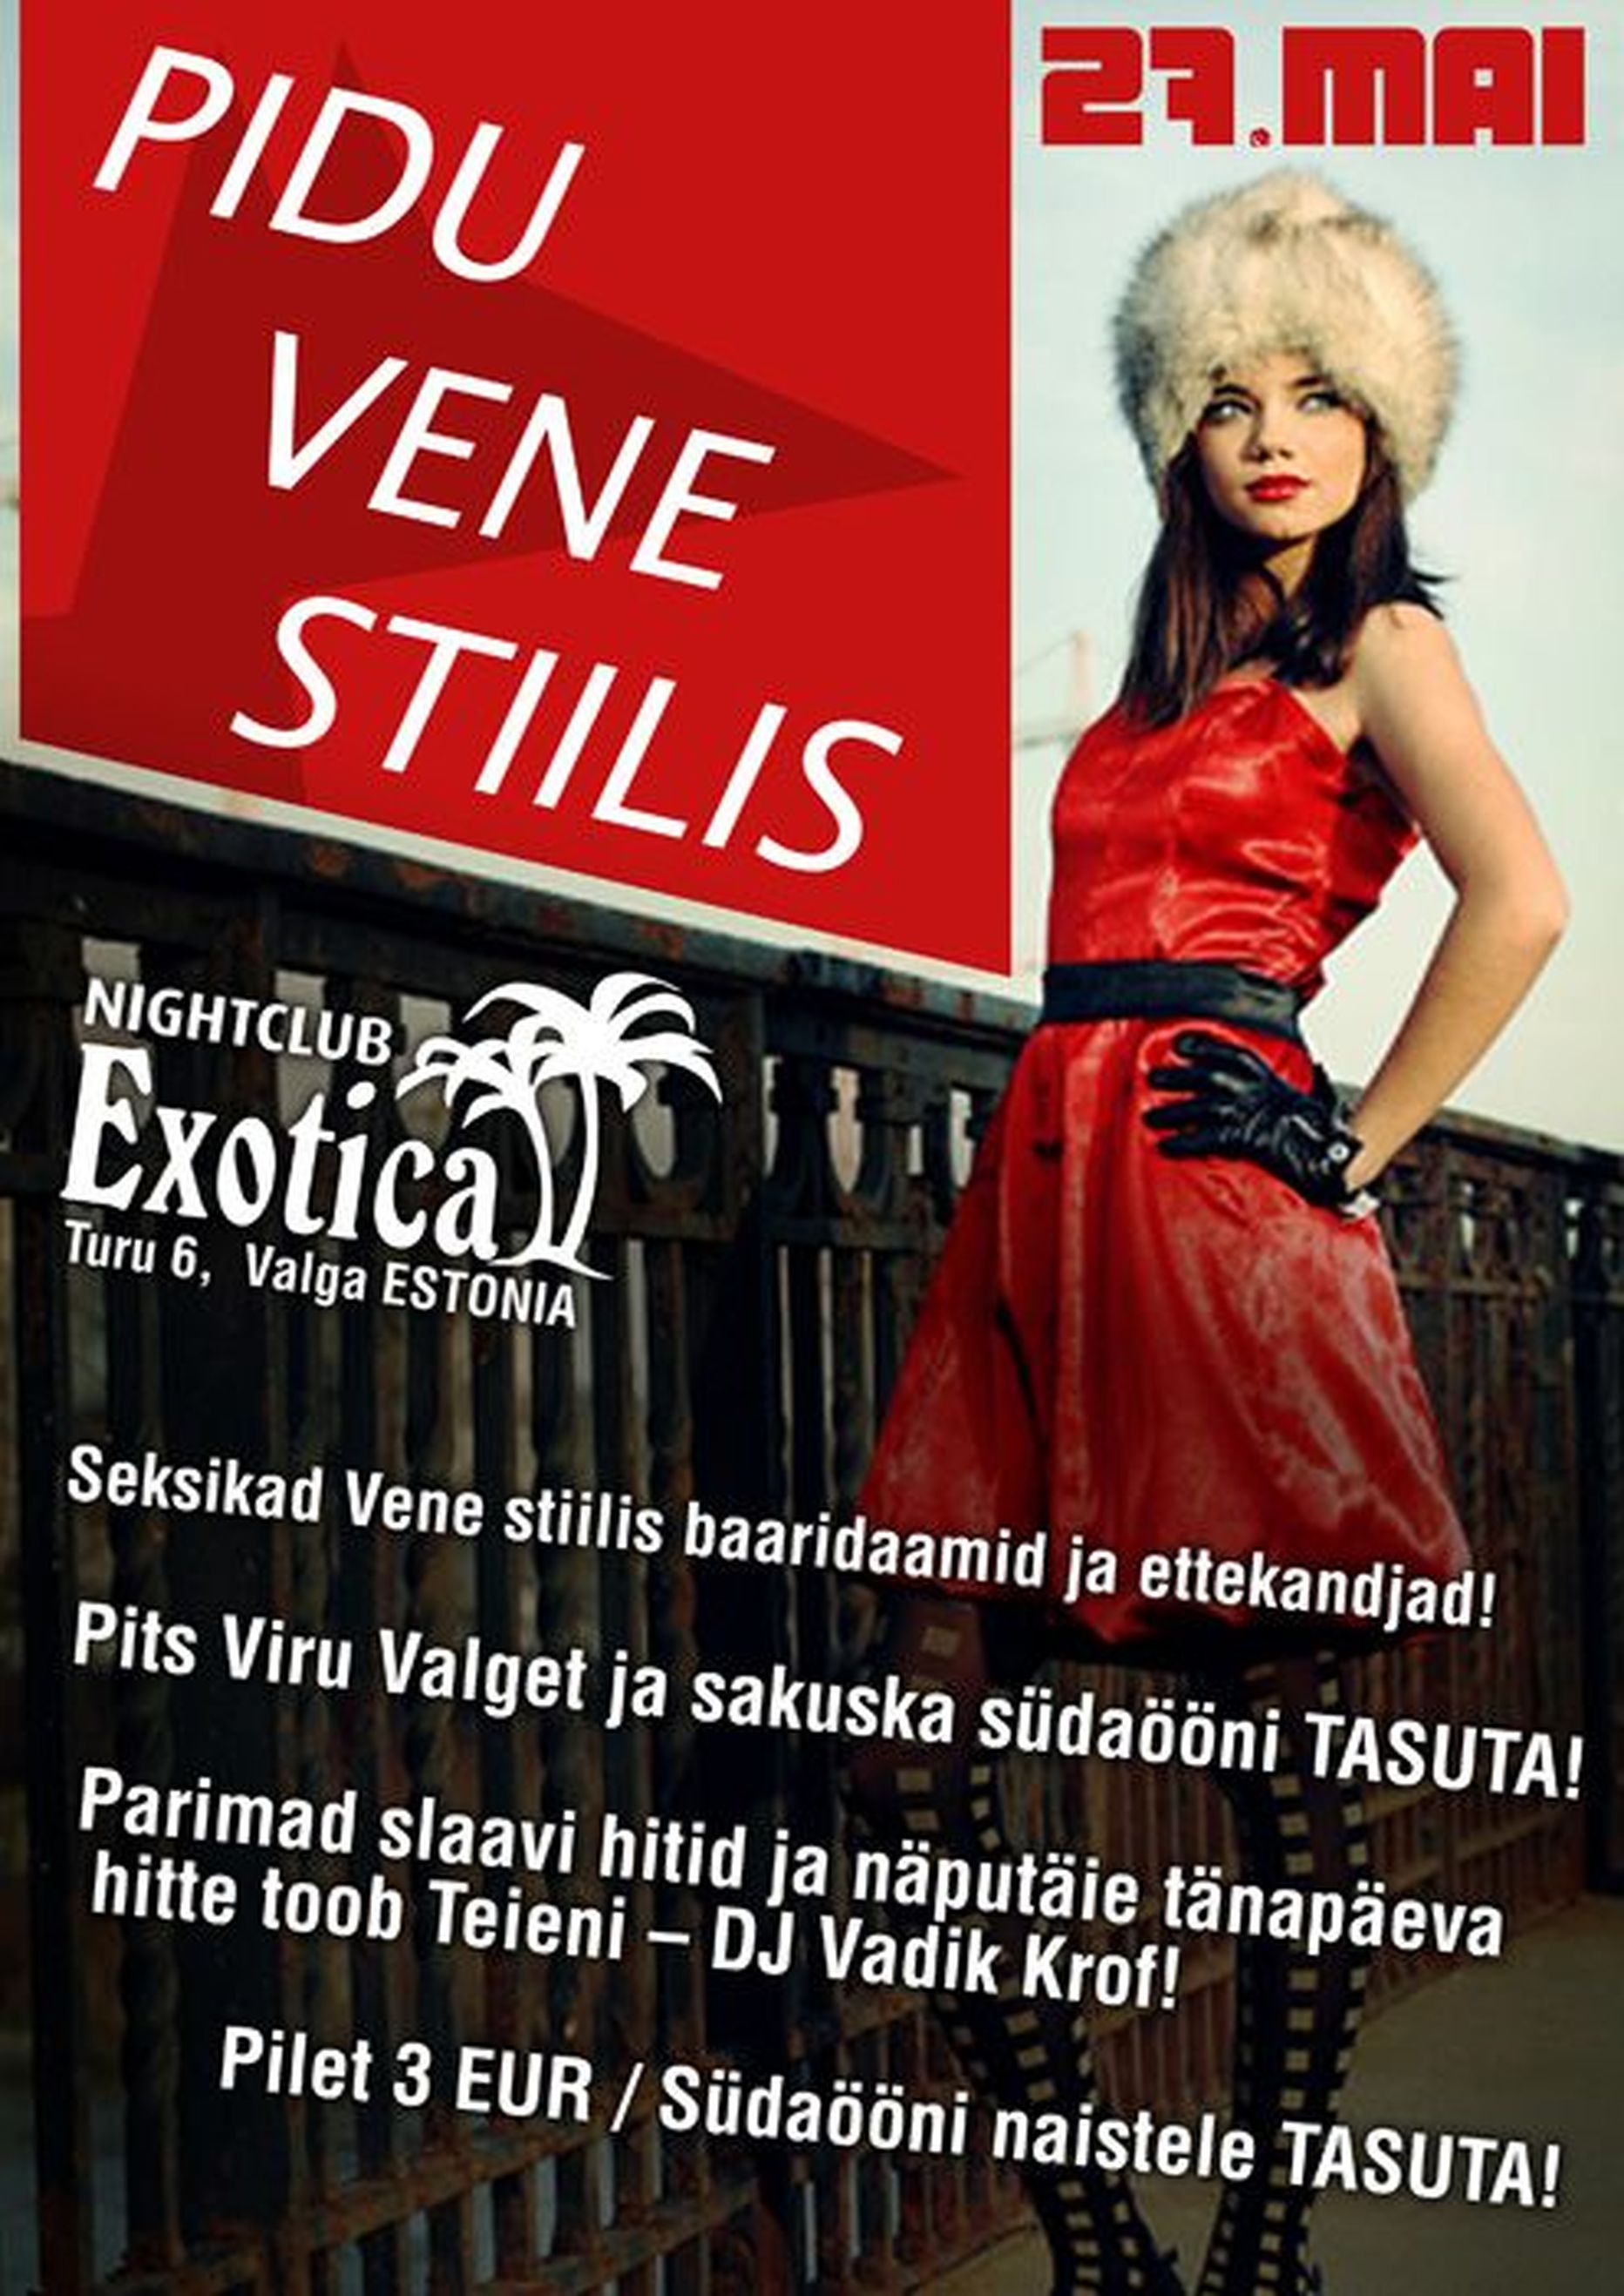 Vene stiilipidu reedel ööklubis Exotica!